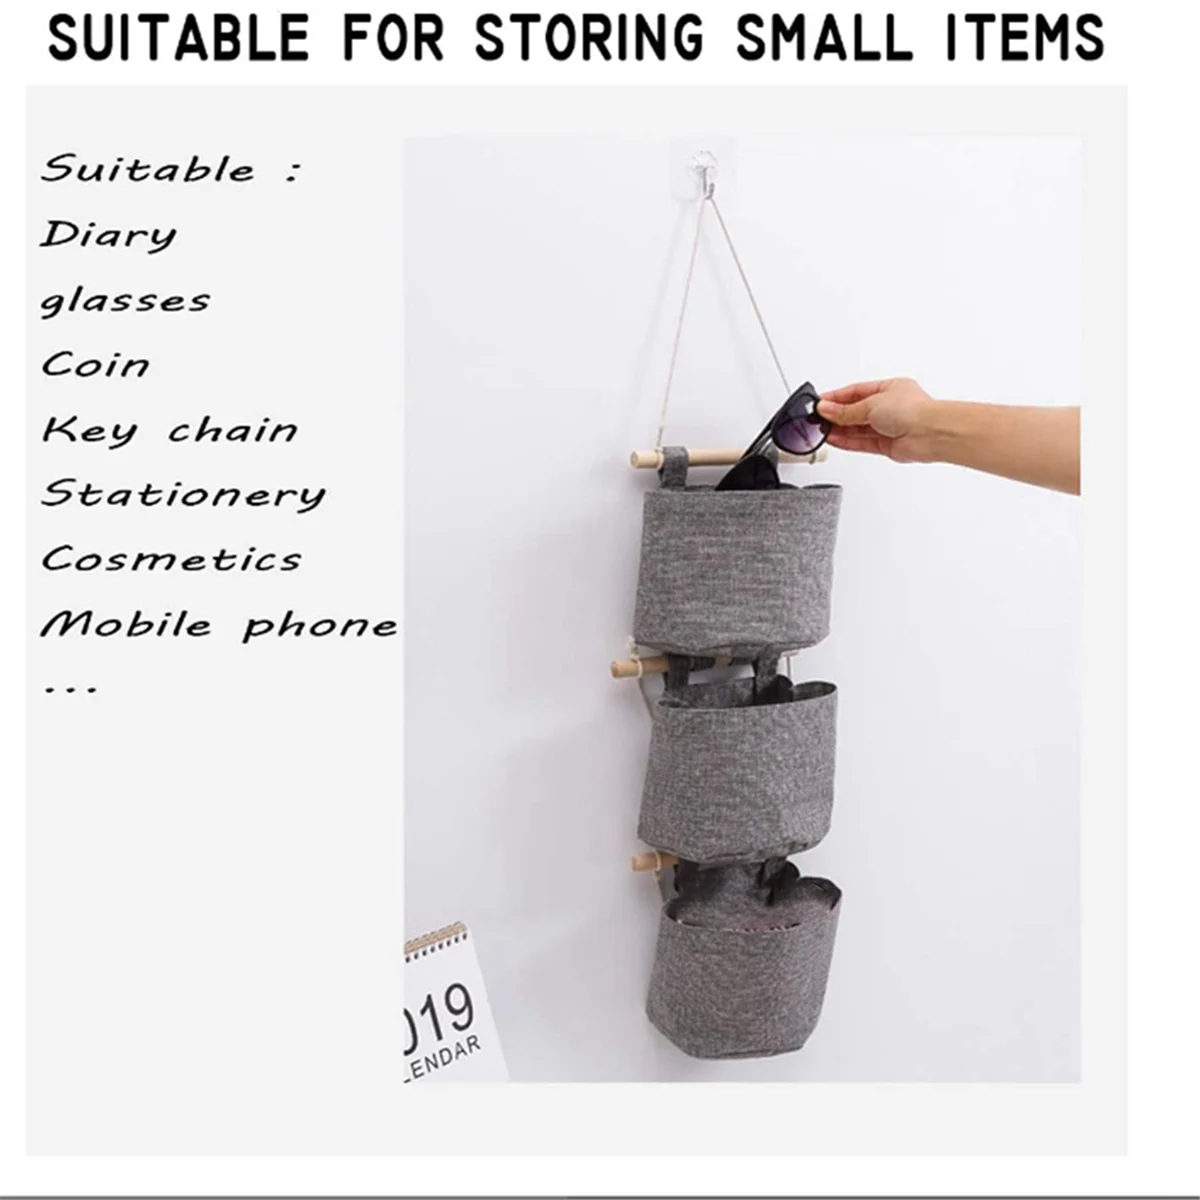 

Closet Detachable Free Combination Foldable Washable Hanging Storage Bag for Room Bathroom,Khaki